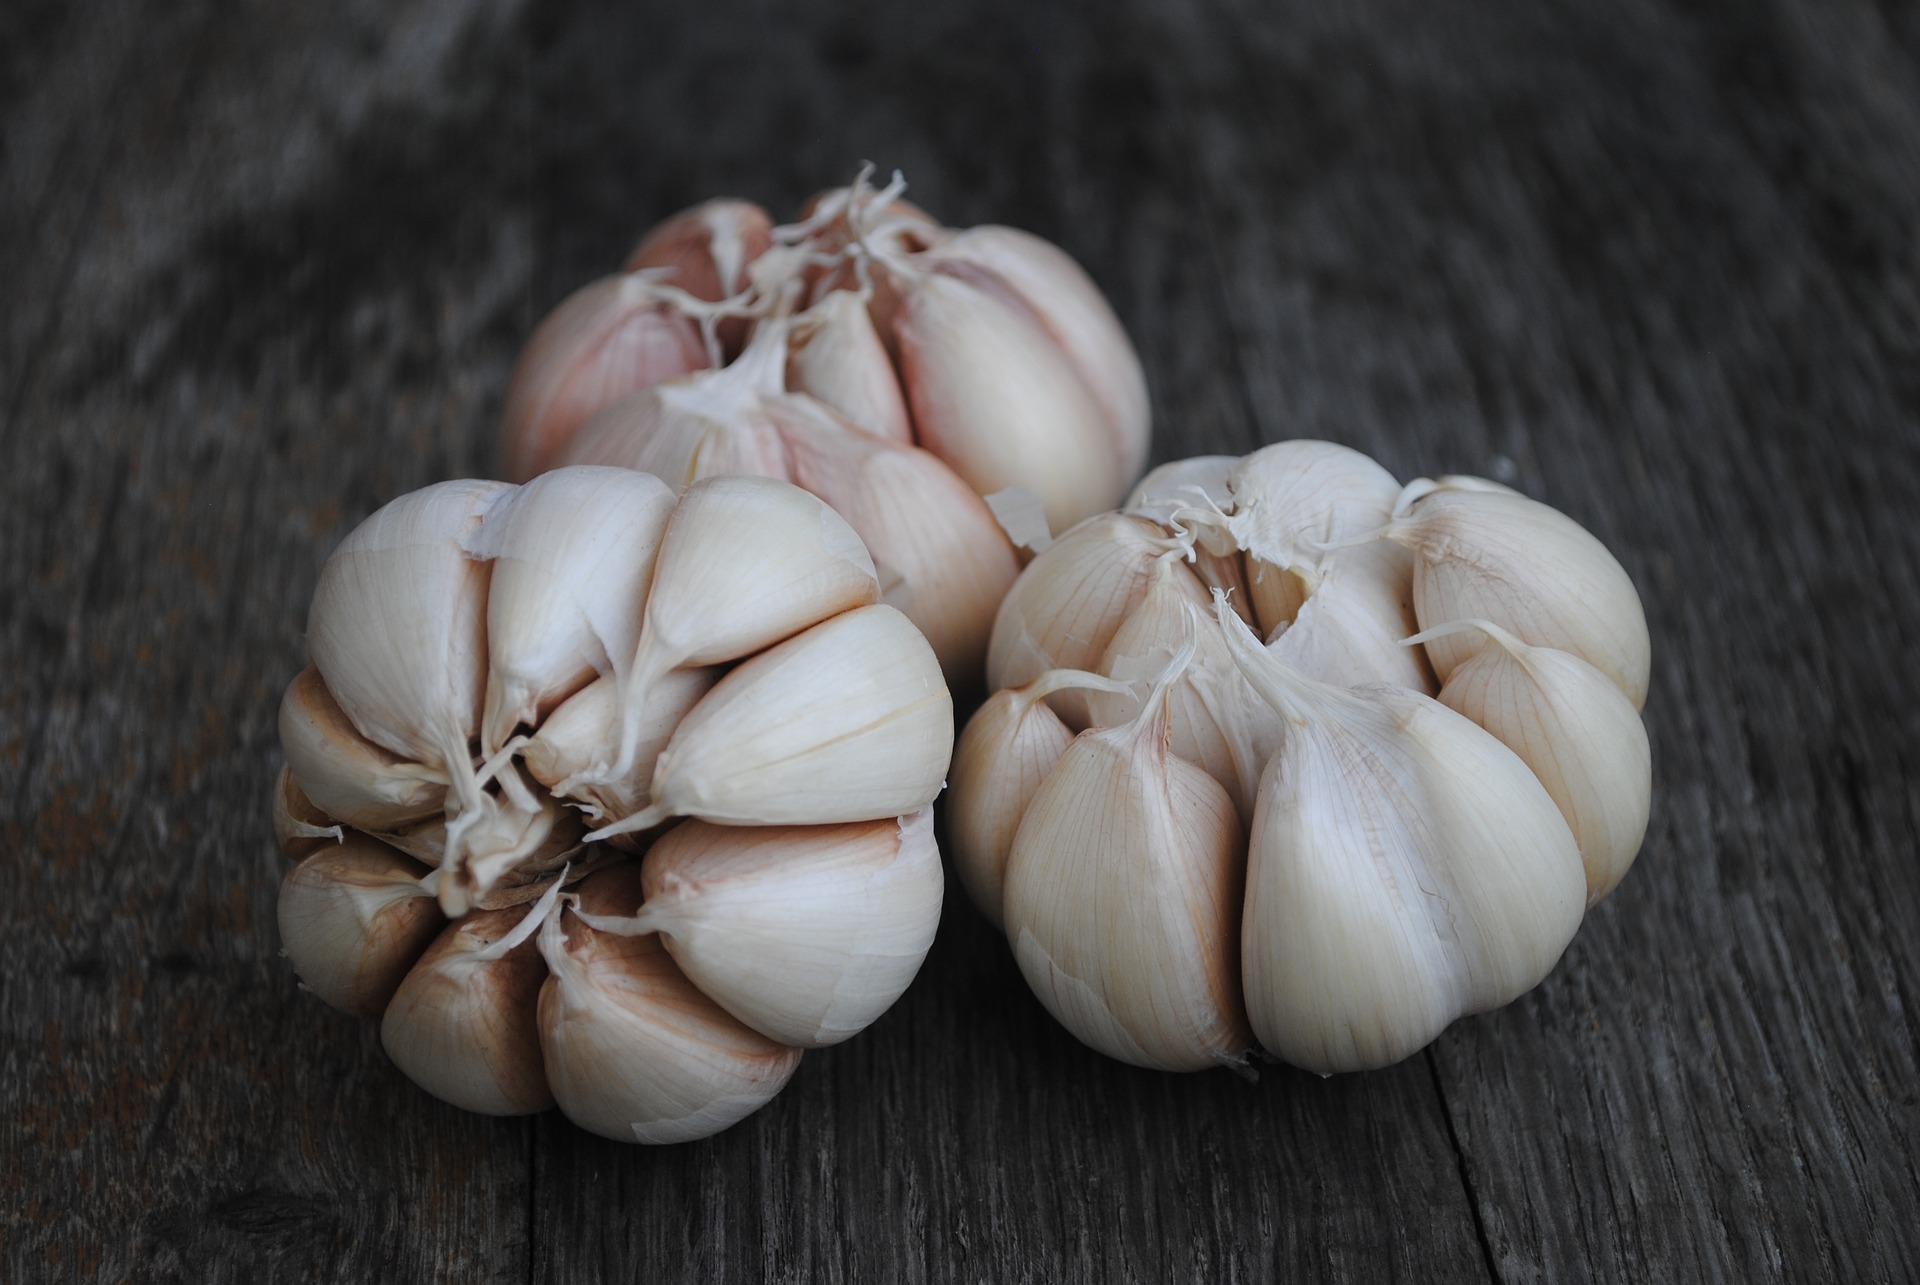 How many teaspoons minced garlic equals 1 clove